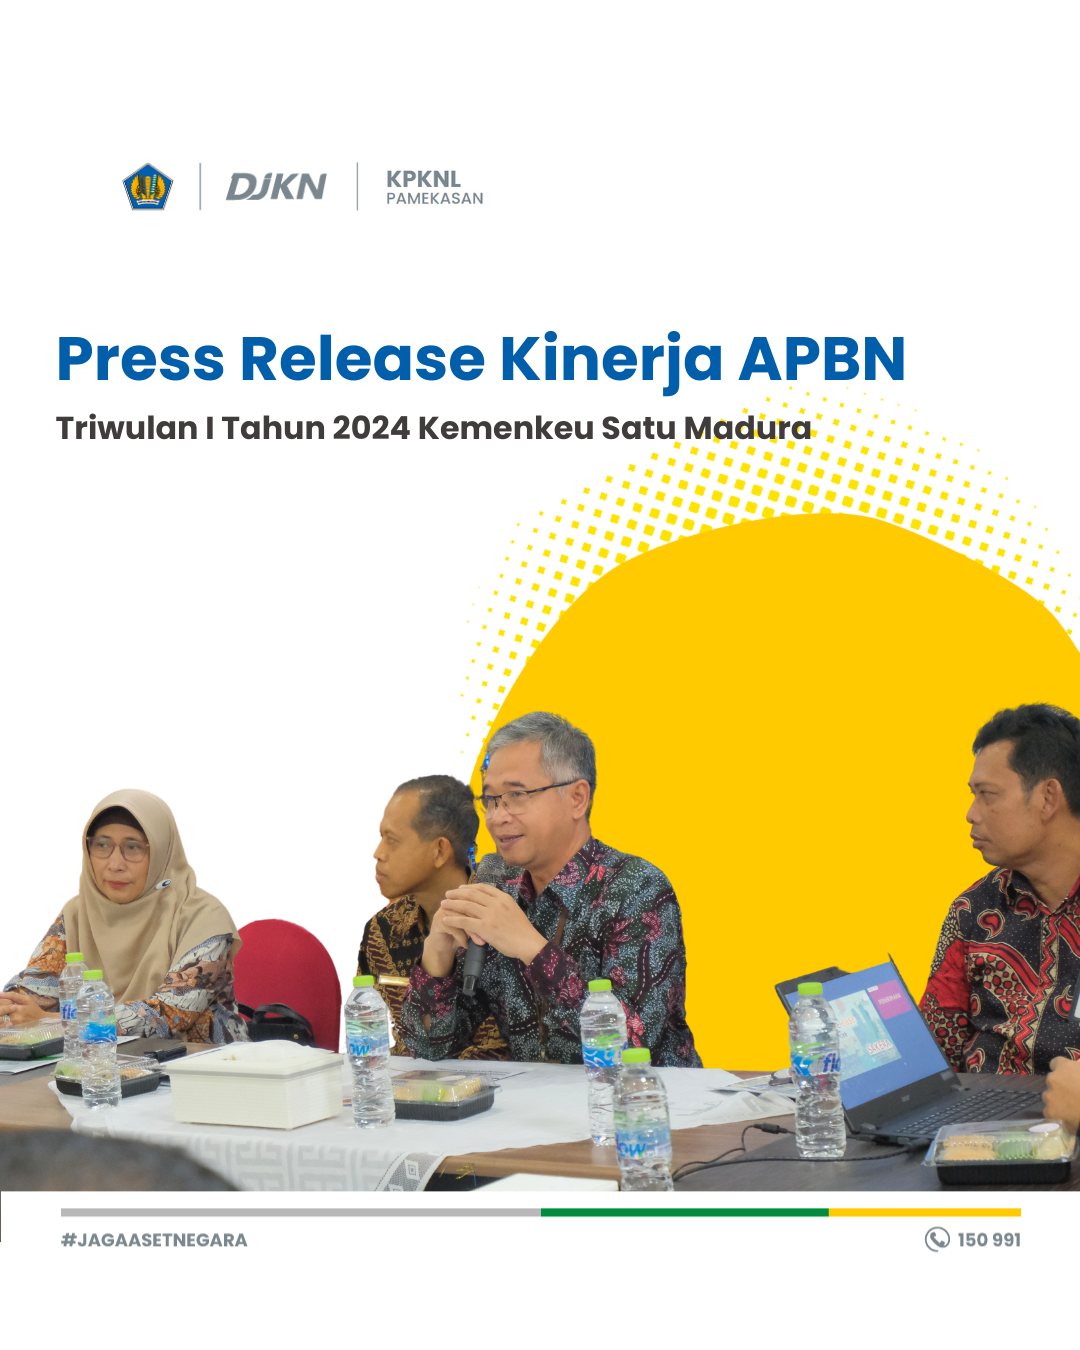 Press Release Kinerja APBN Madura Triwulan I 2024